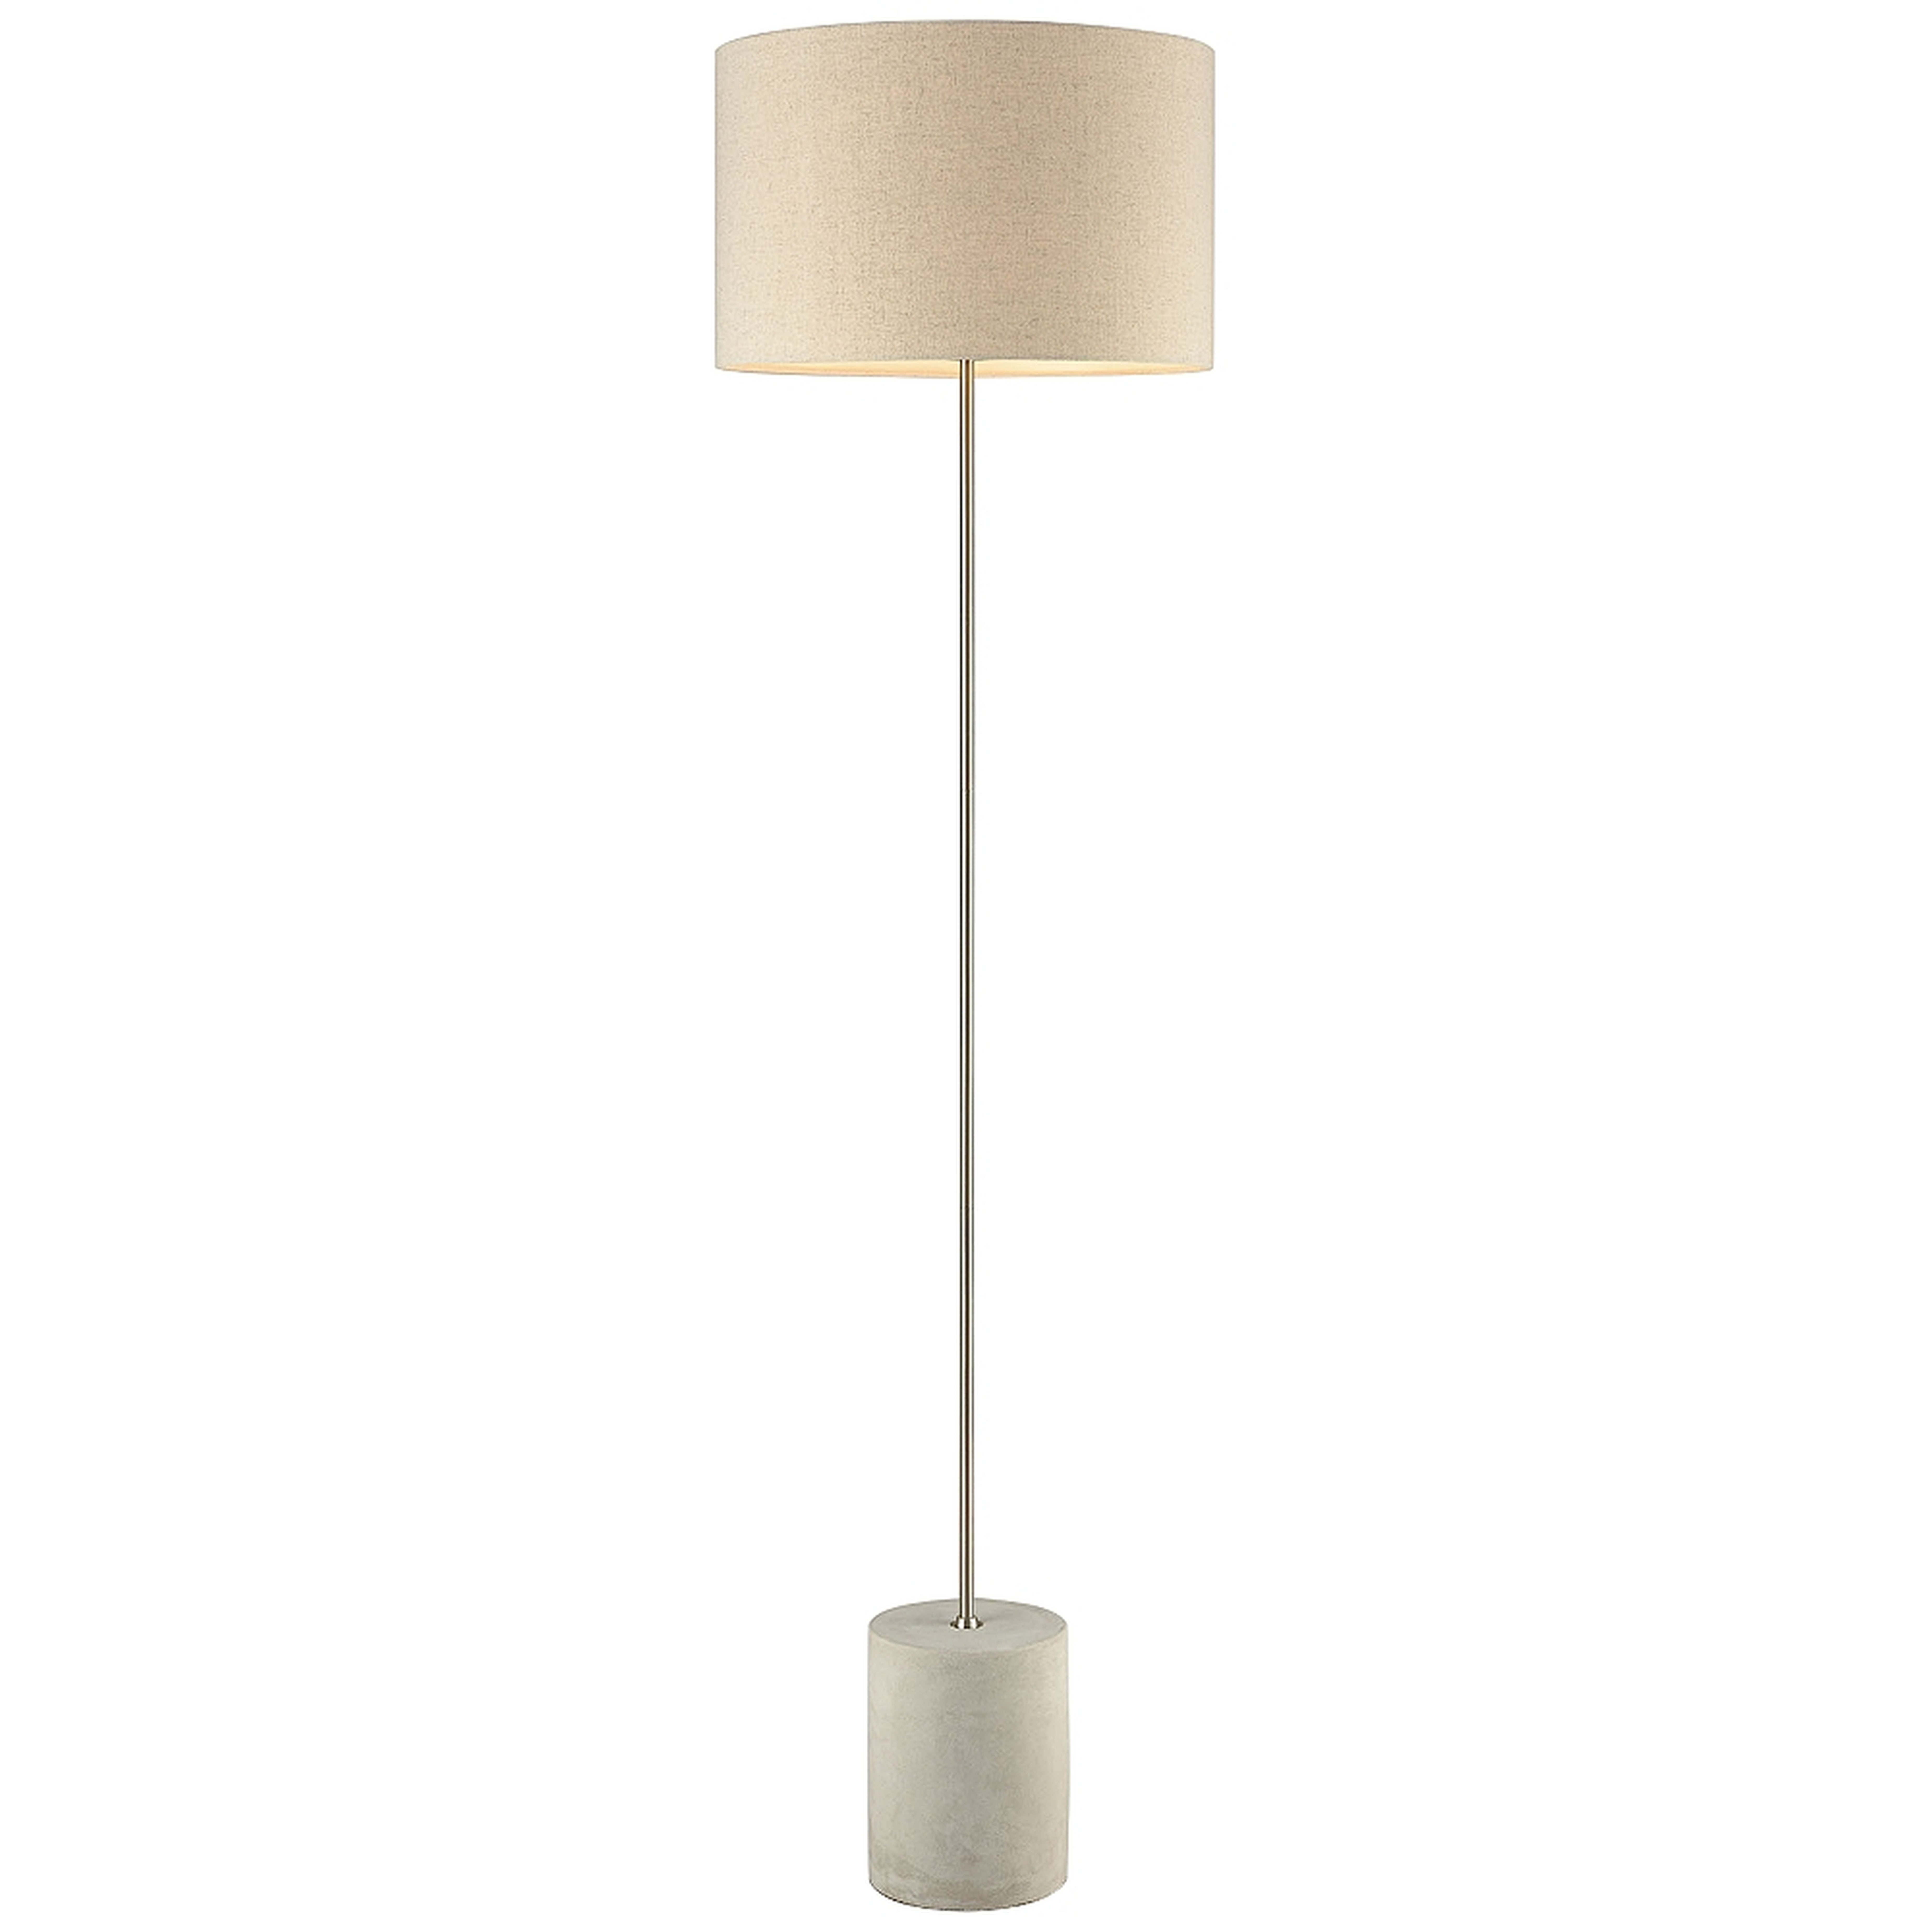 Dimond Katwijk Concrete Floor Lamp, Nickel - Lamps Plus